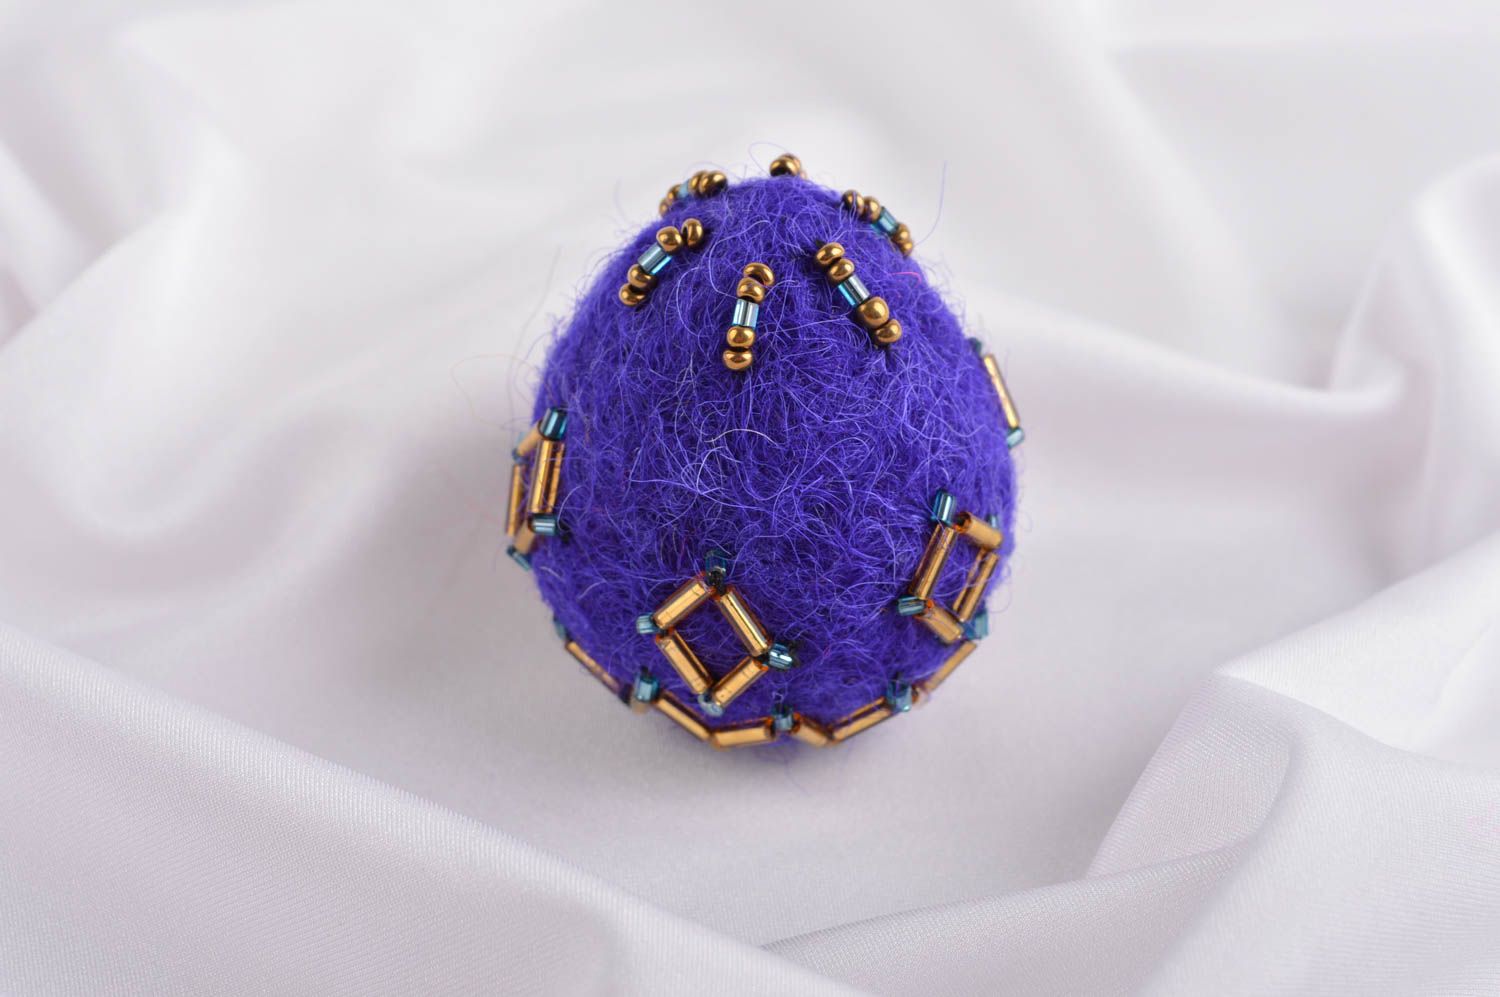 Handmade Easter decor ideas stylish violet interior egg decorative use only photo 1